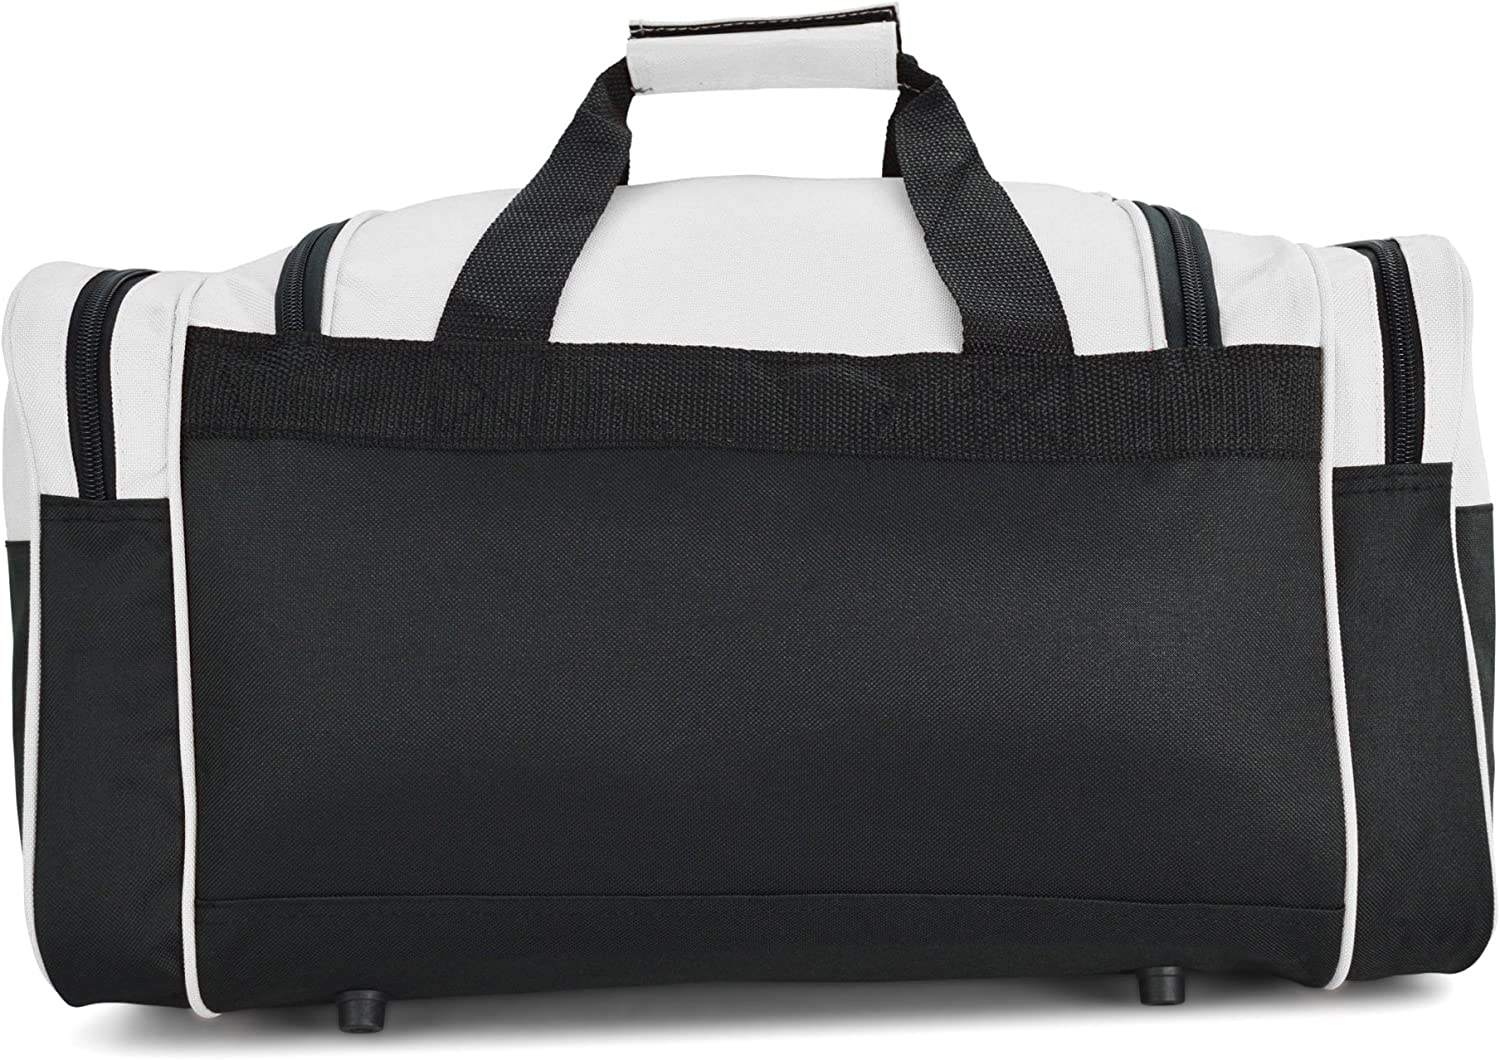 New Arrivals Hot Sales Leisure Waterproof Organiser Packing Duffle Travel Bag